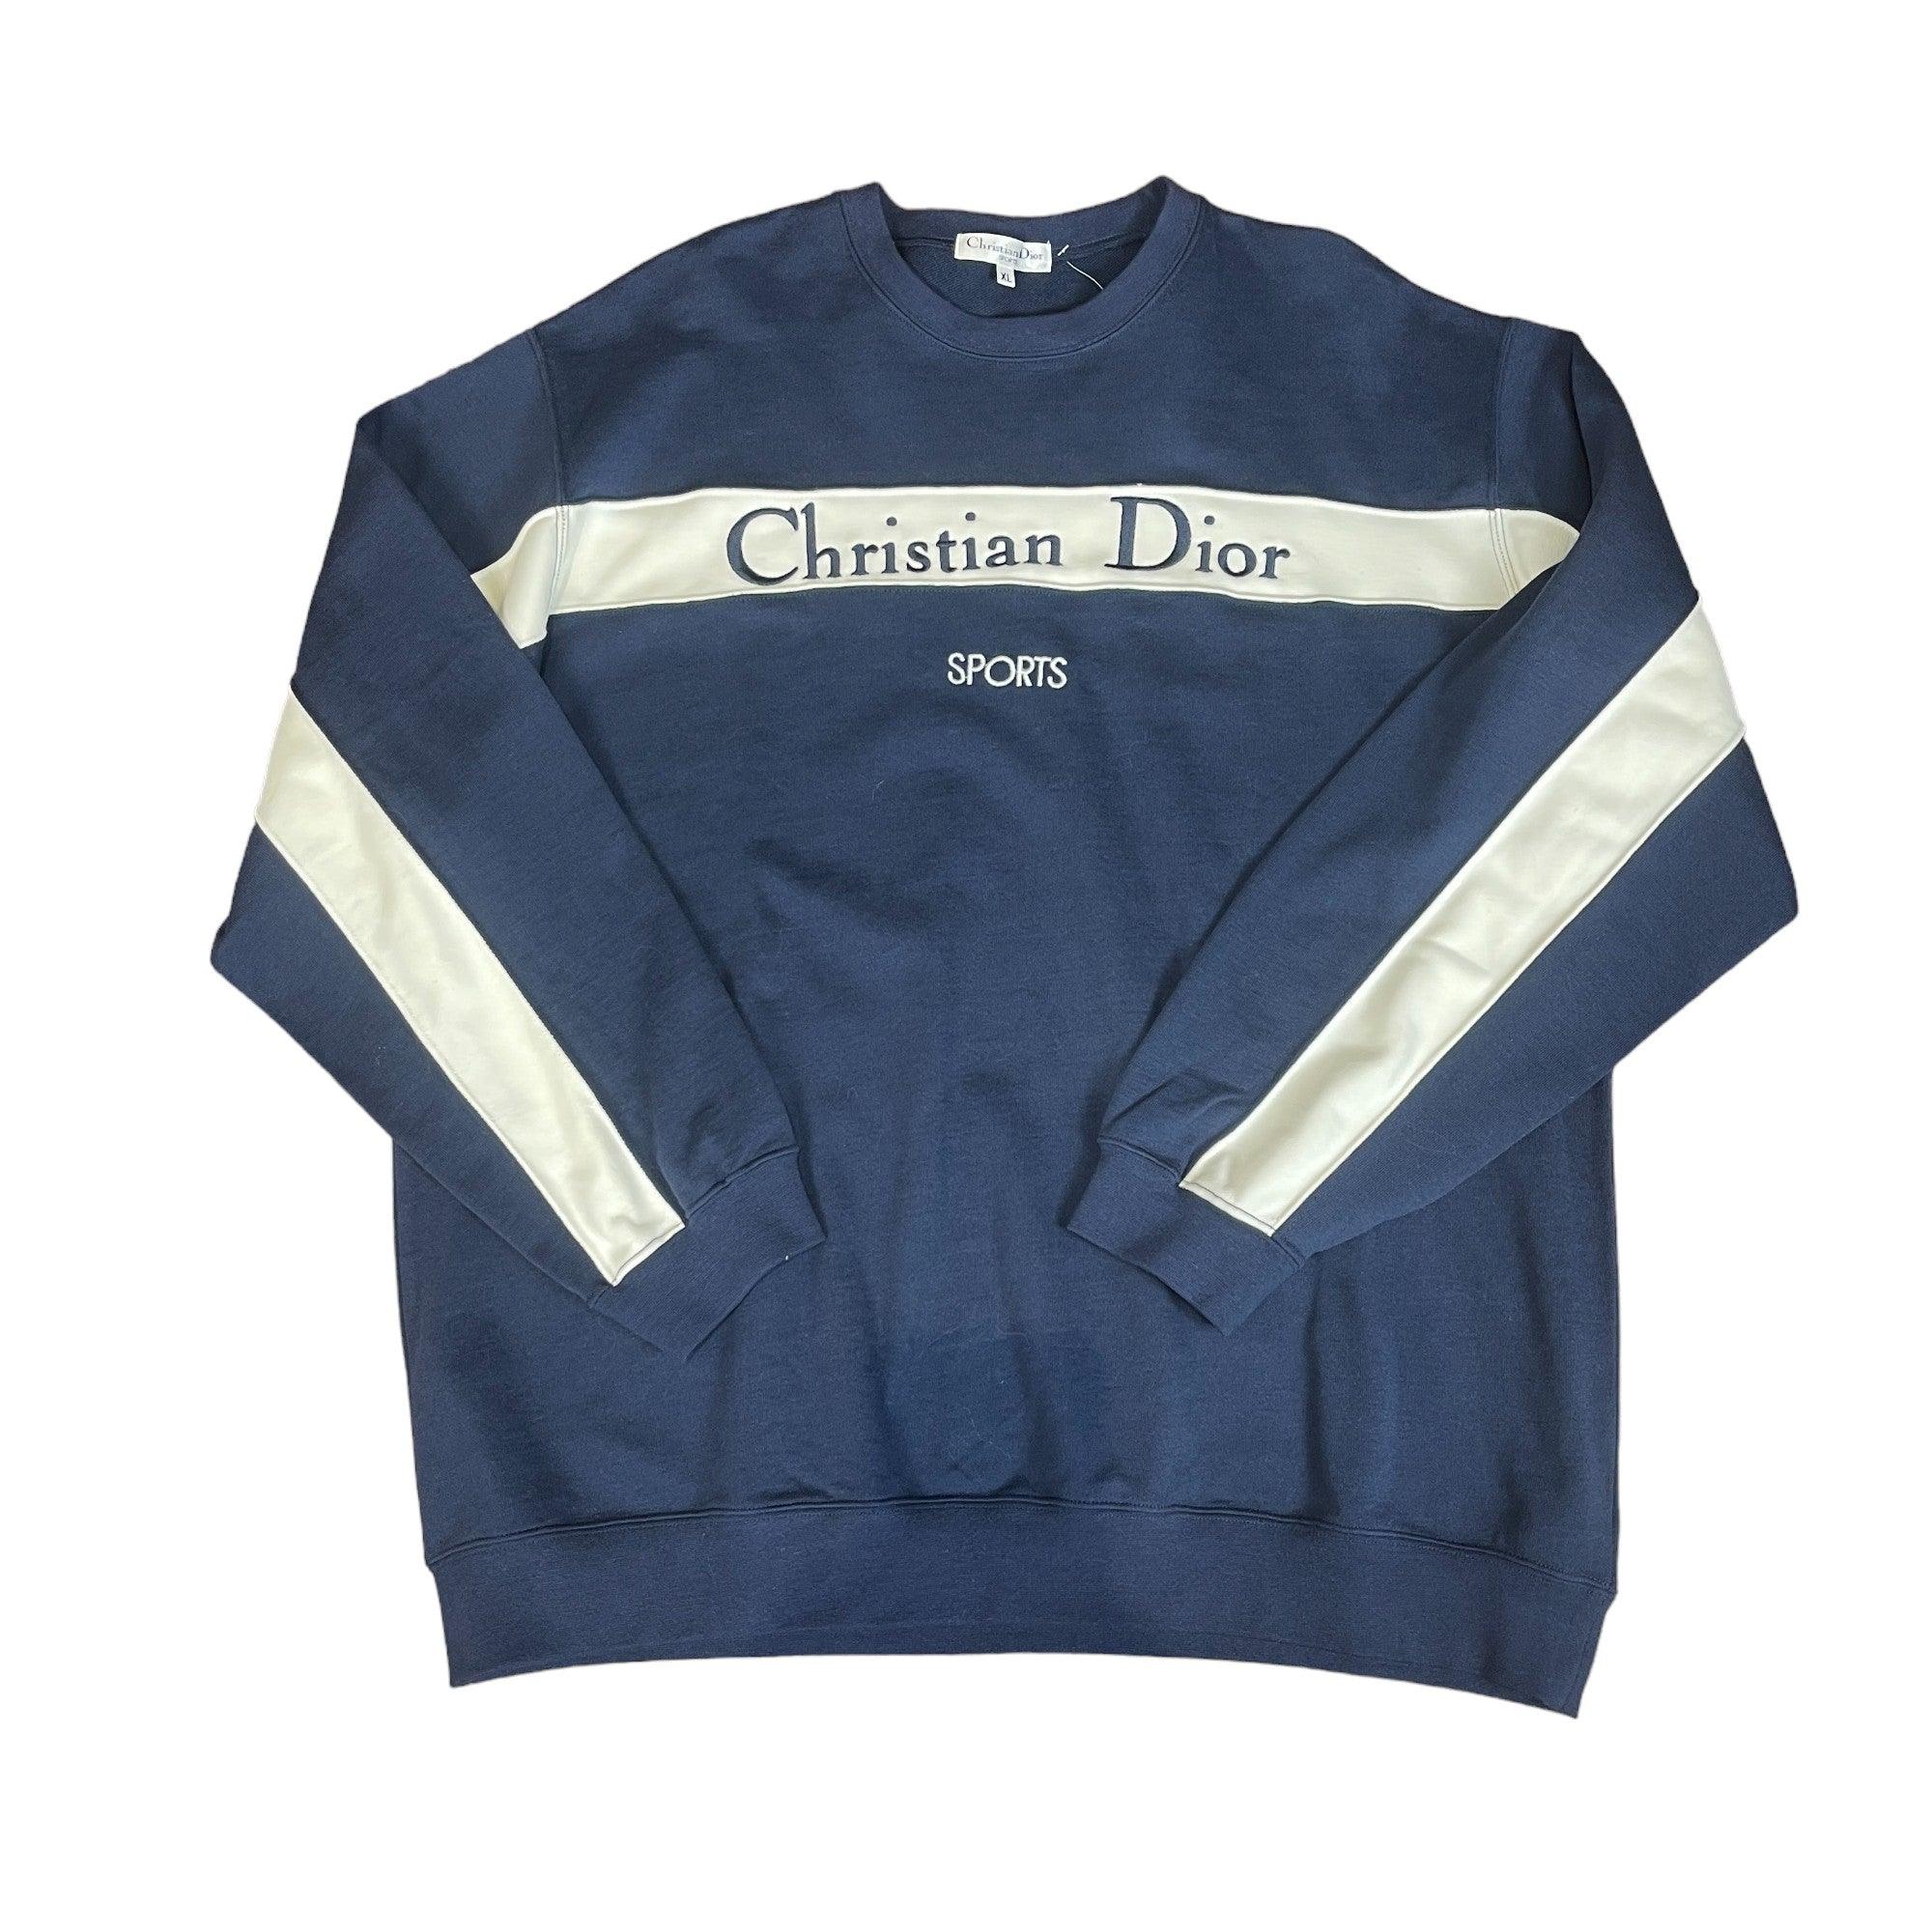 Vintage 90s Navy Blue + White Christian Dior Sweatshirt - Extra Large - The Streetwear Studio